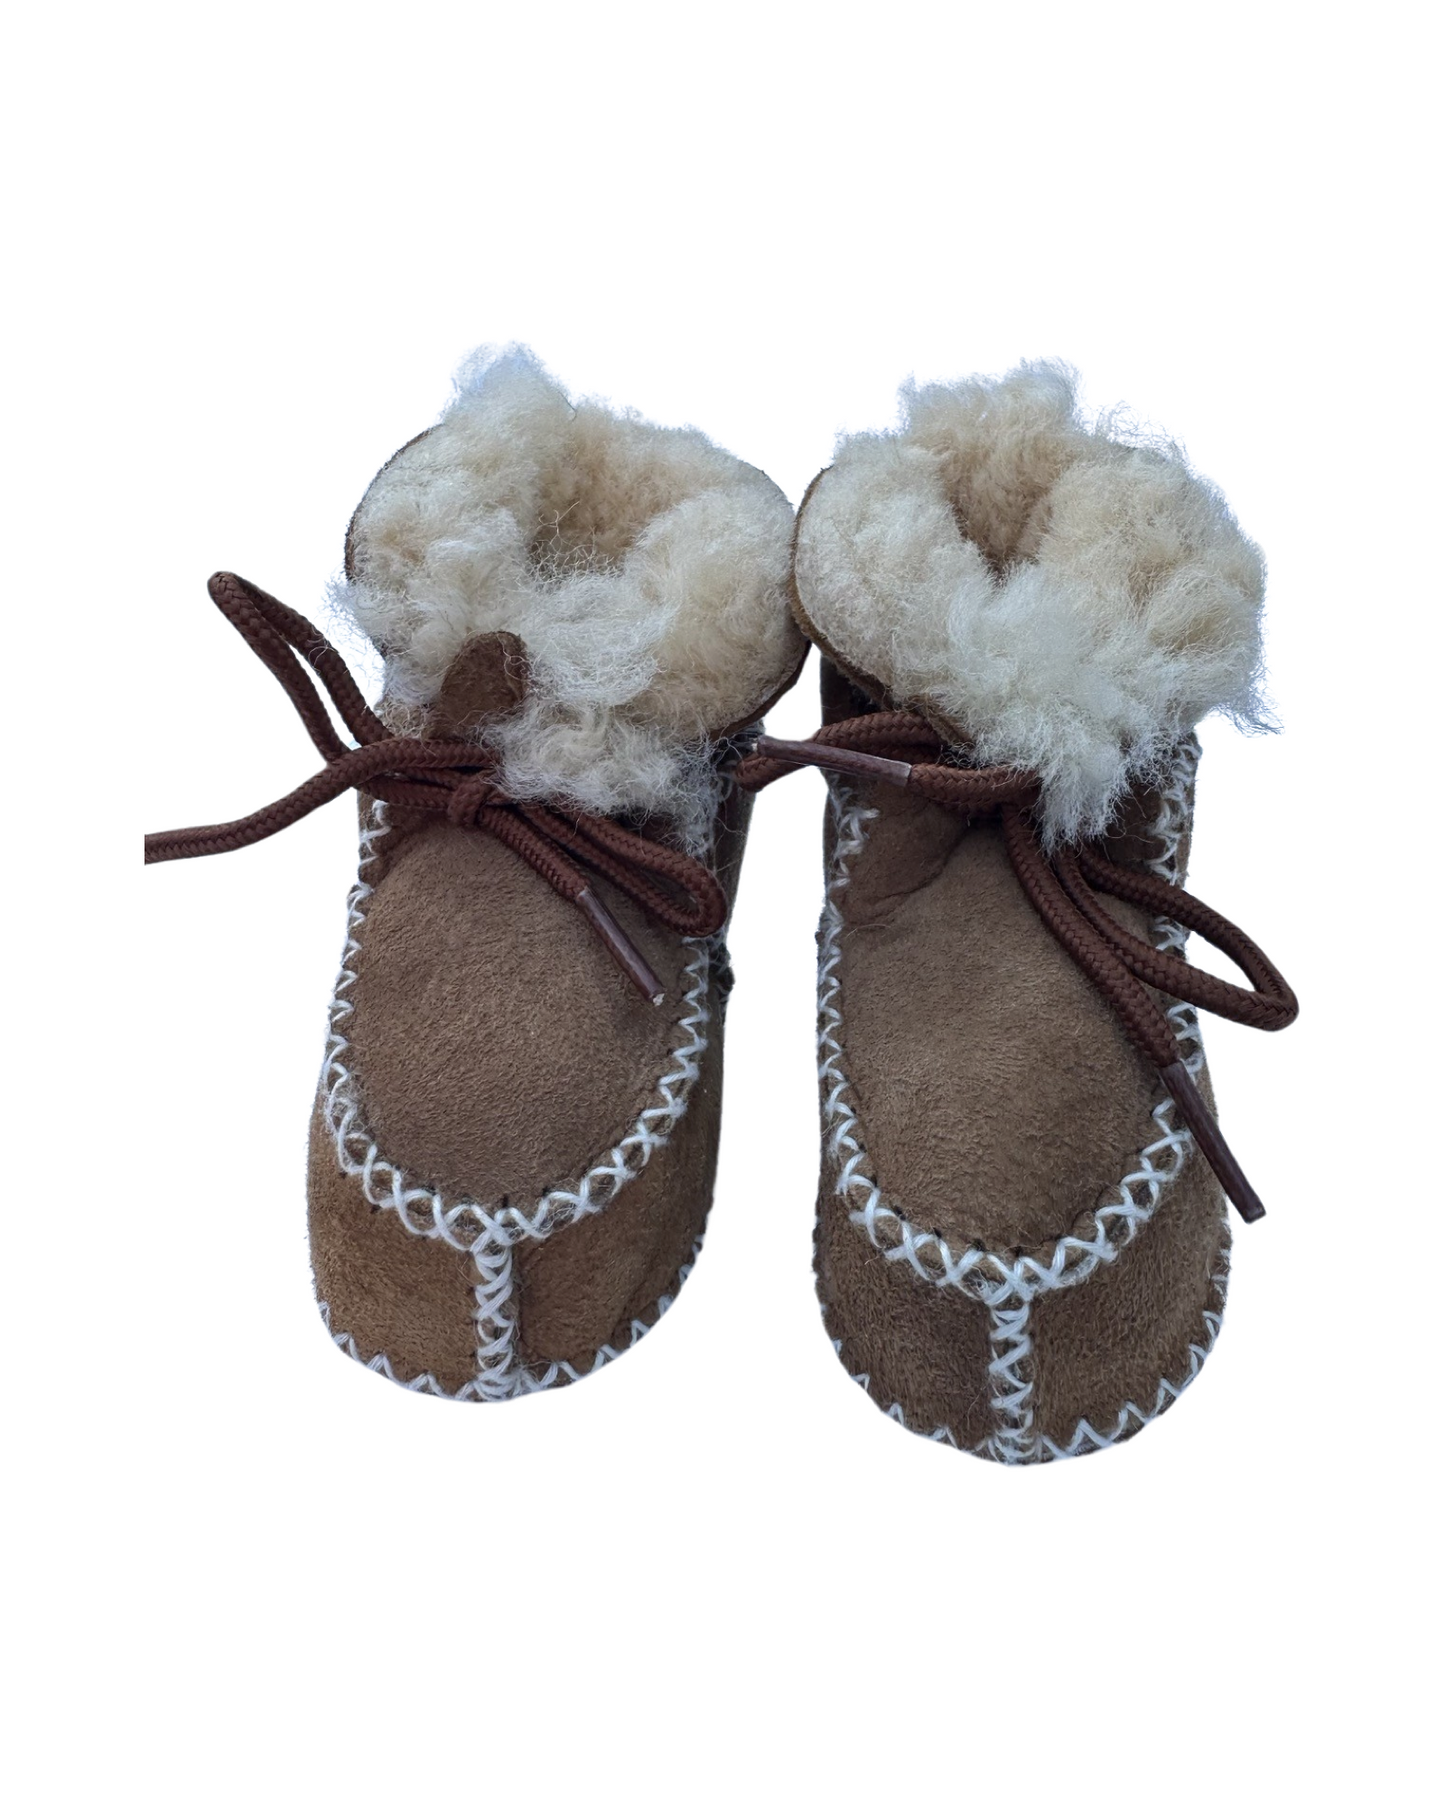 Sheepskin baby booties (size 0-6mths)